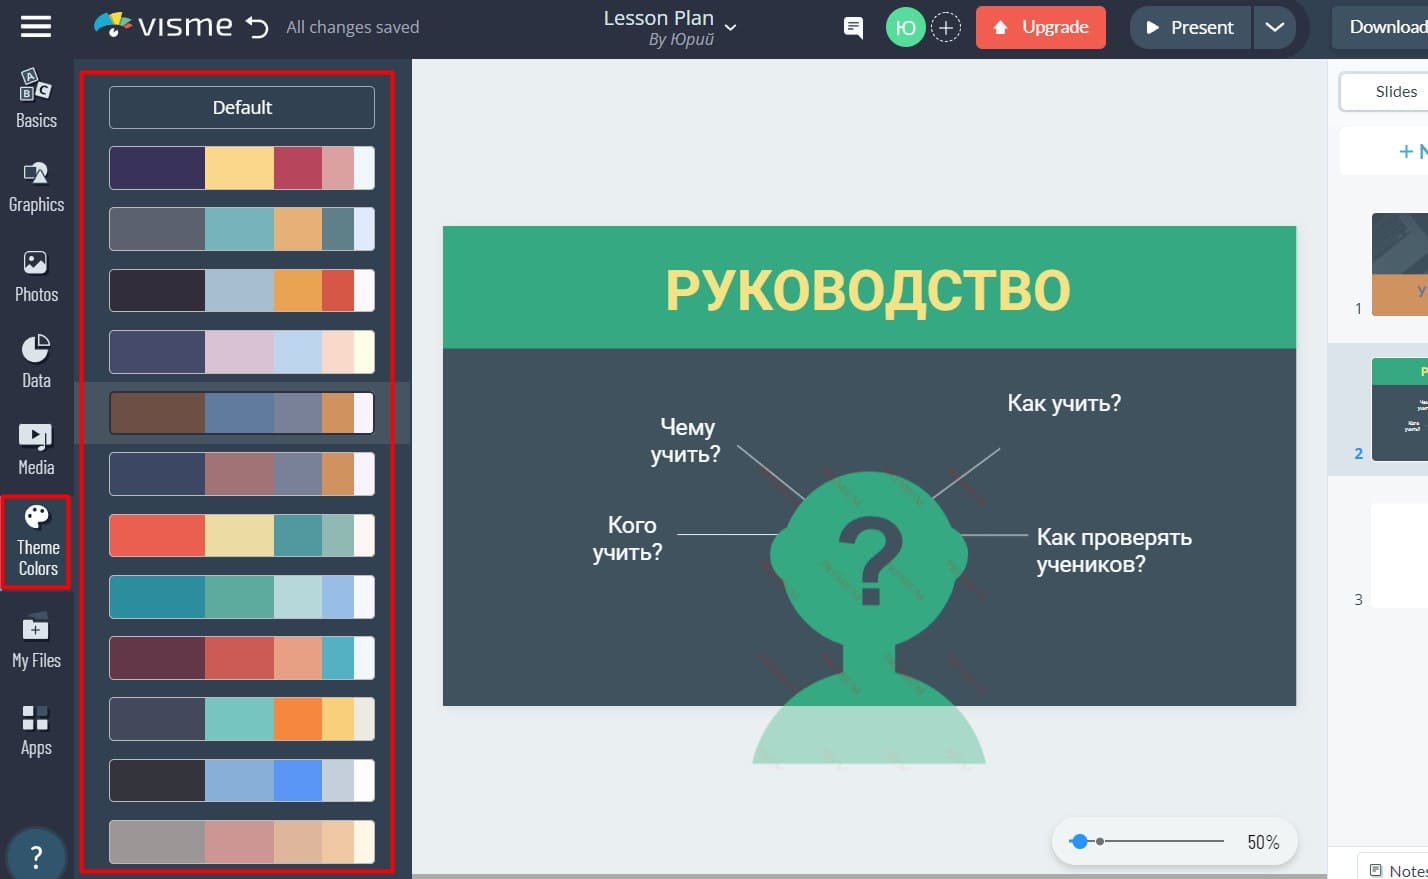 Visme - раздел Theme Colors (Цветовые схемы) в редакторе презентаций